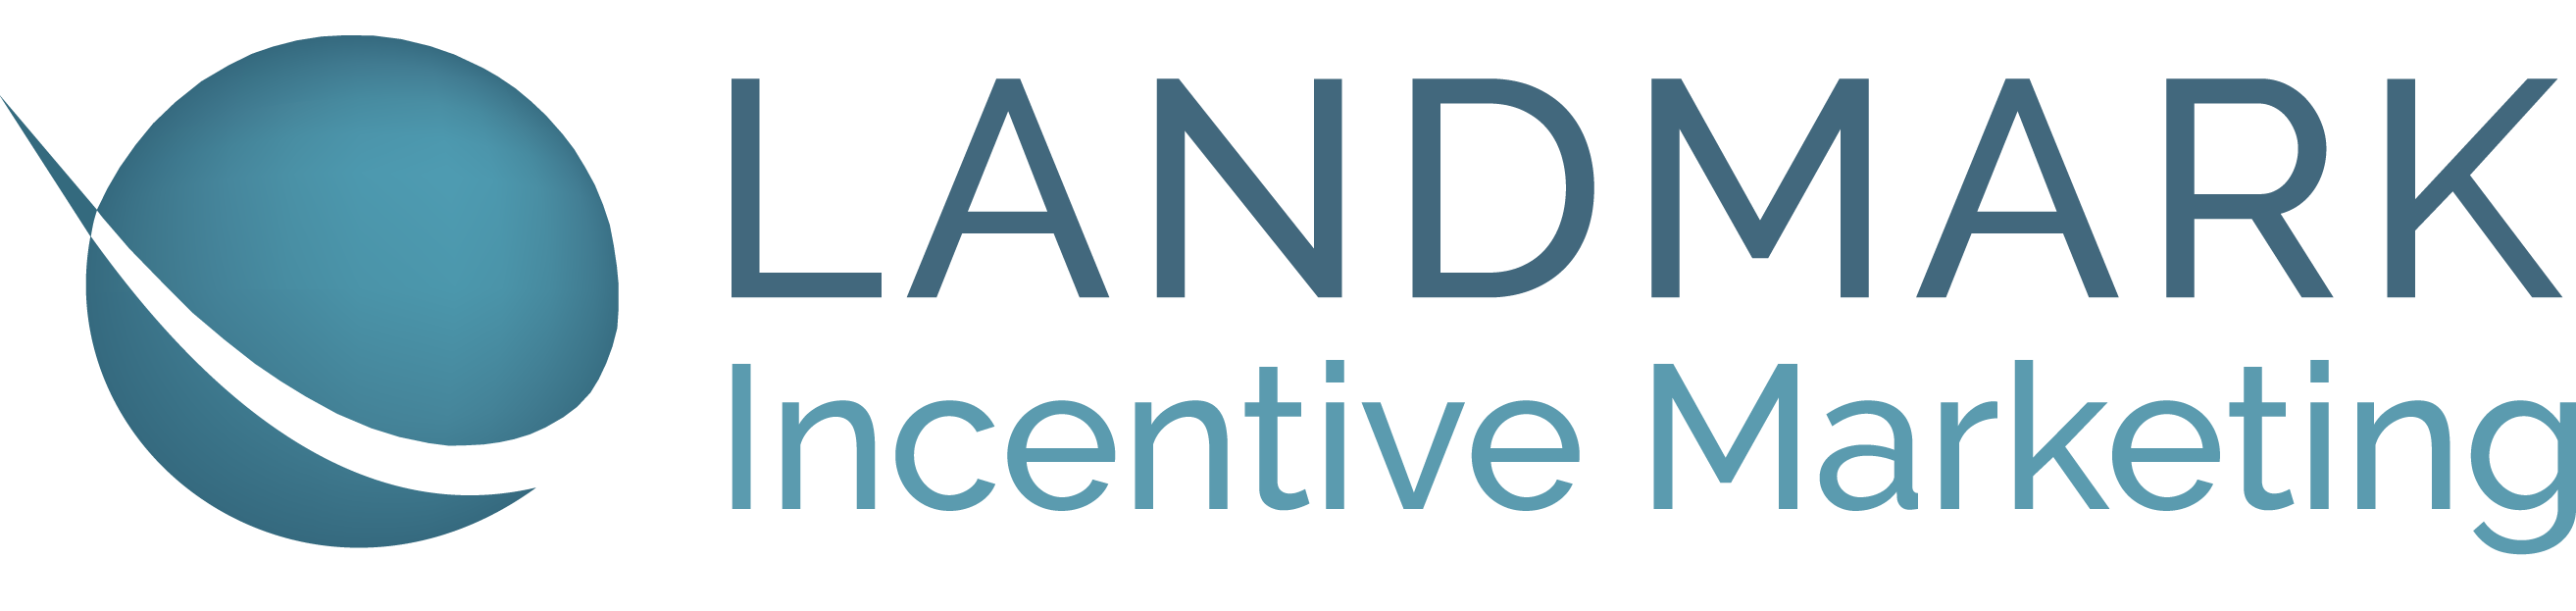 Landmark Logo 2018